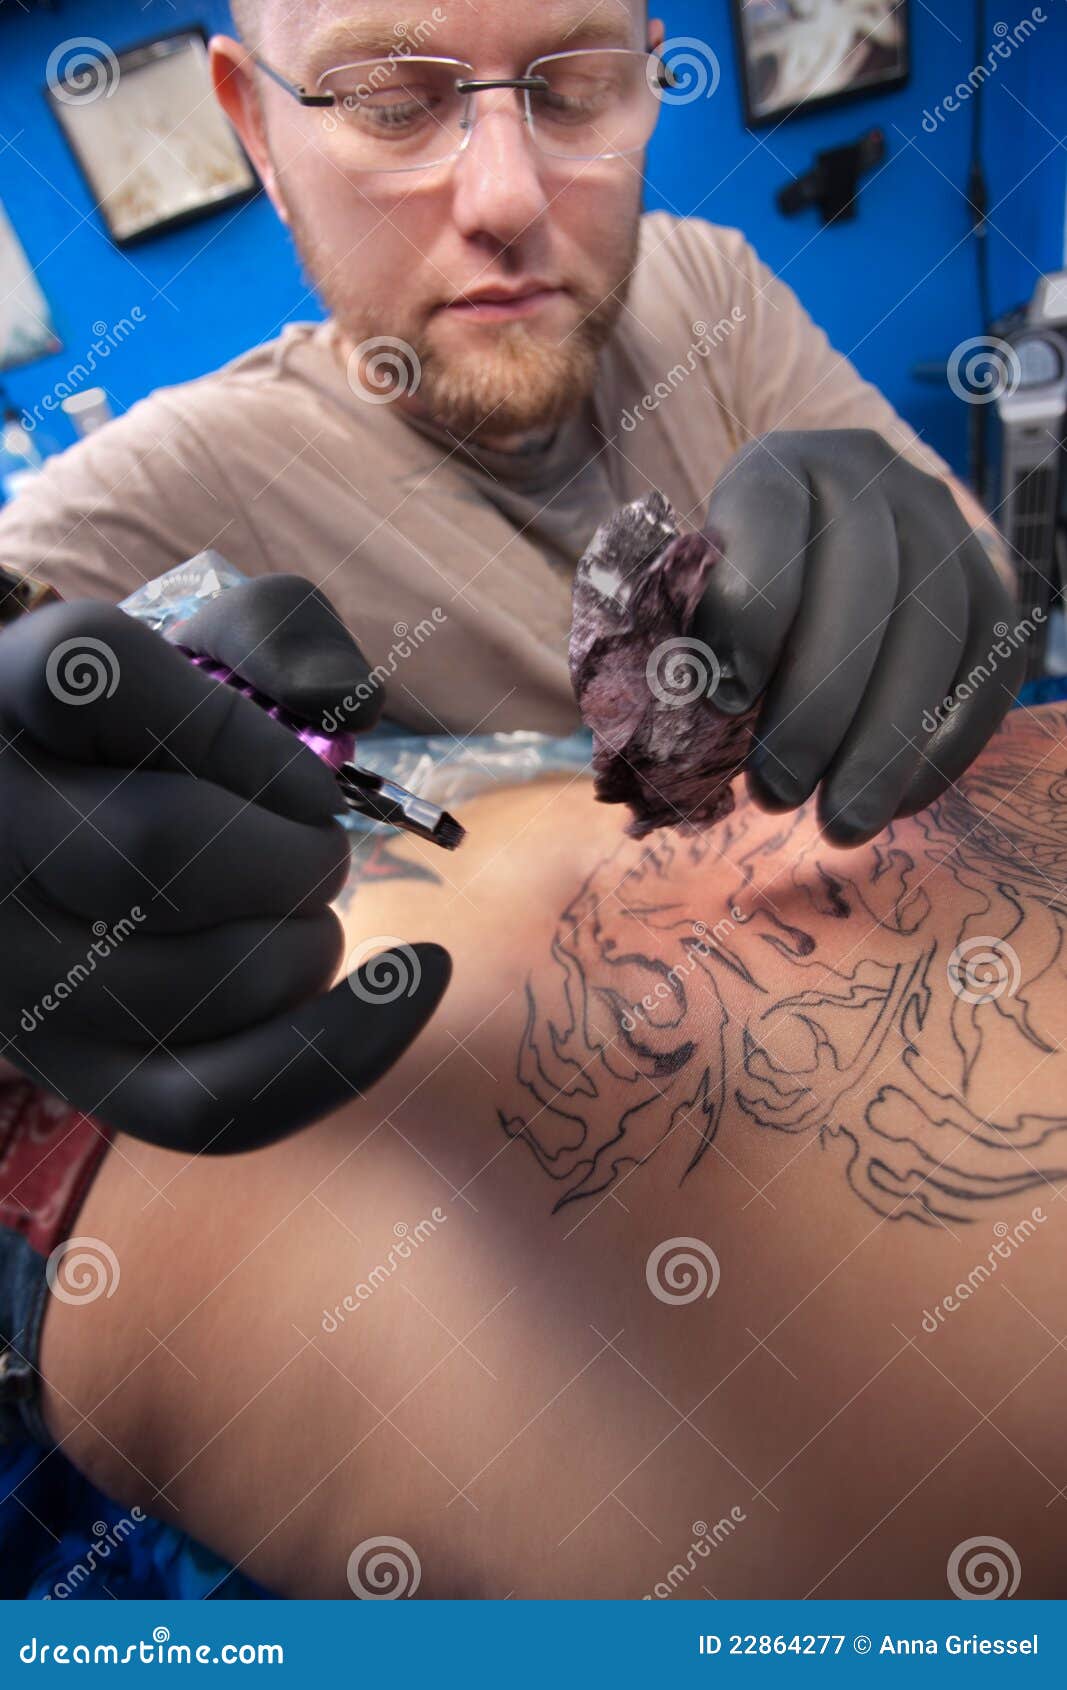 Tattoo Artist at Work